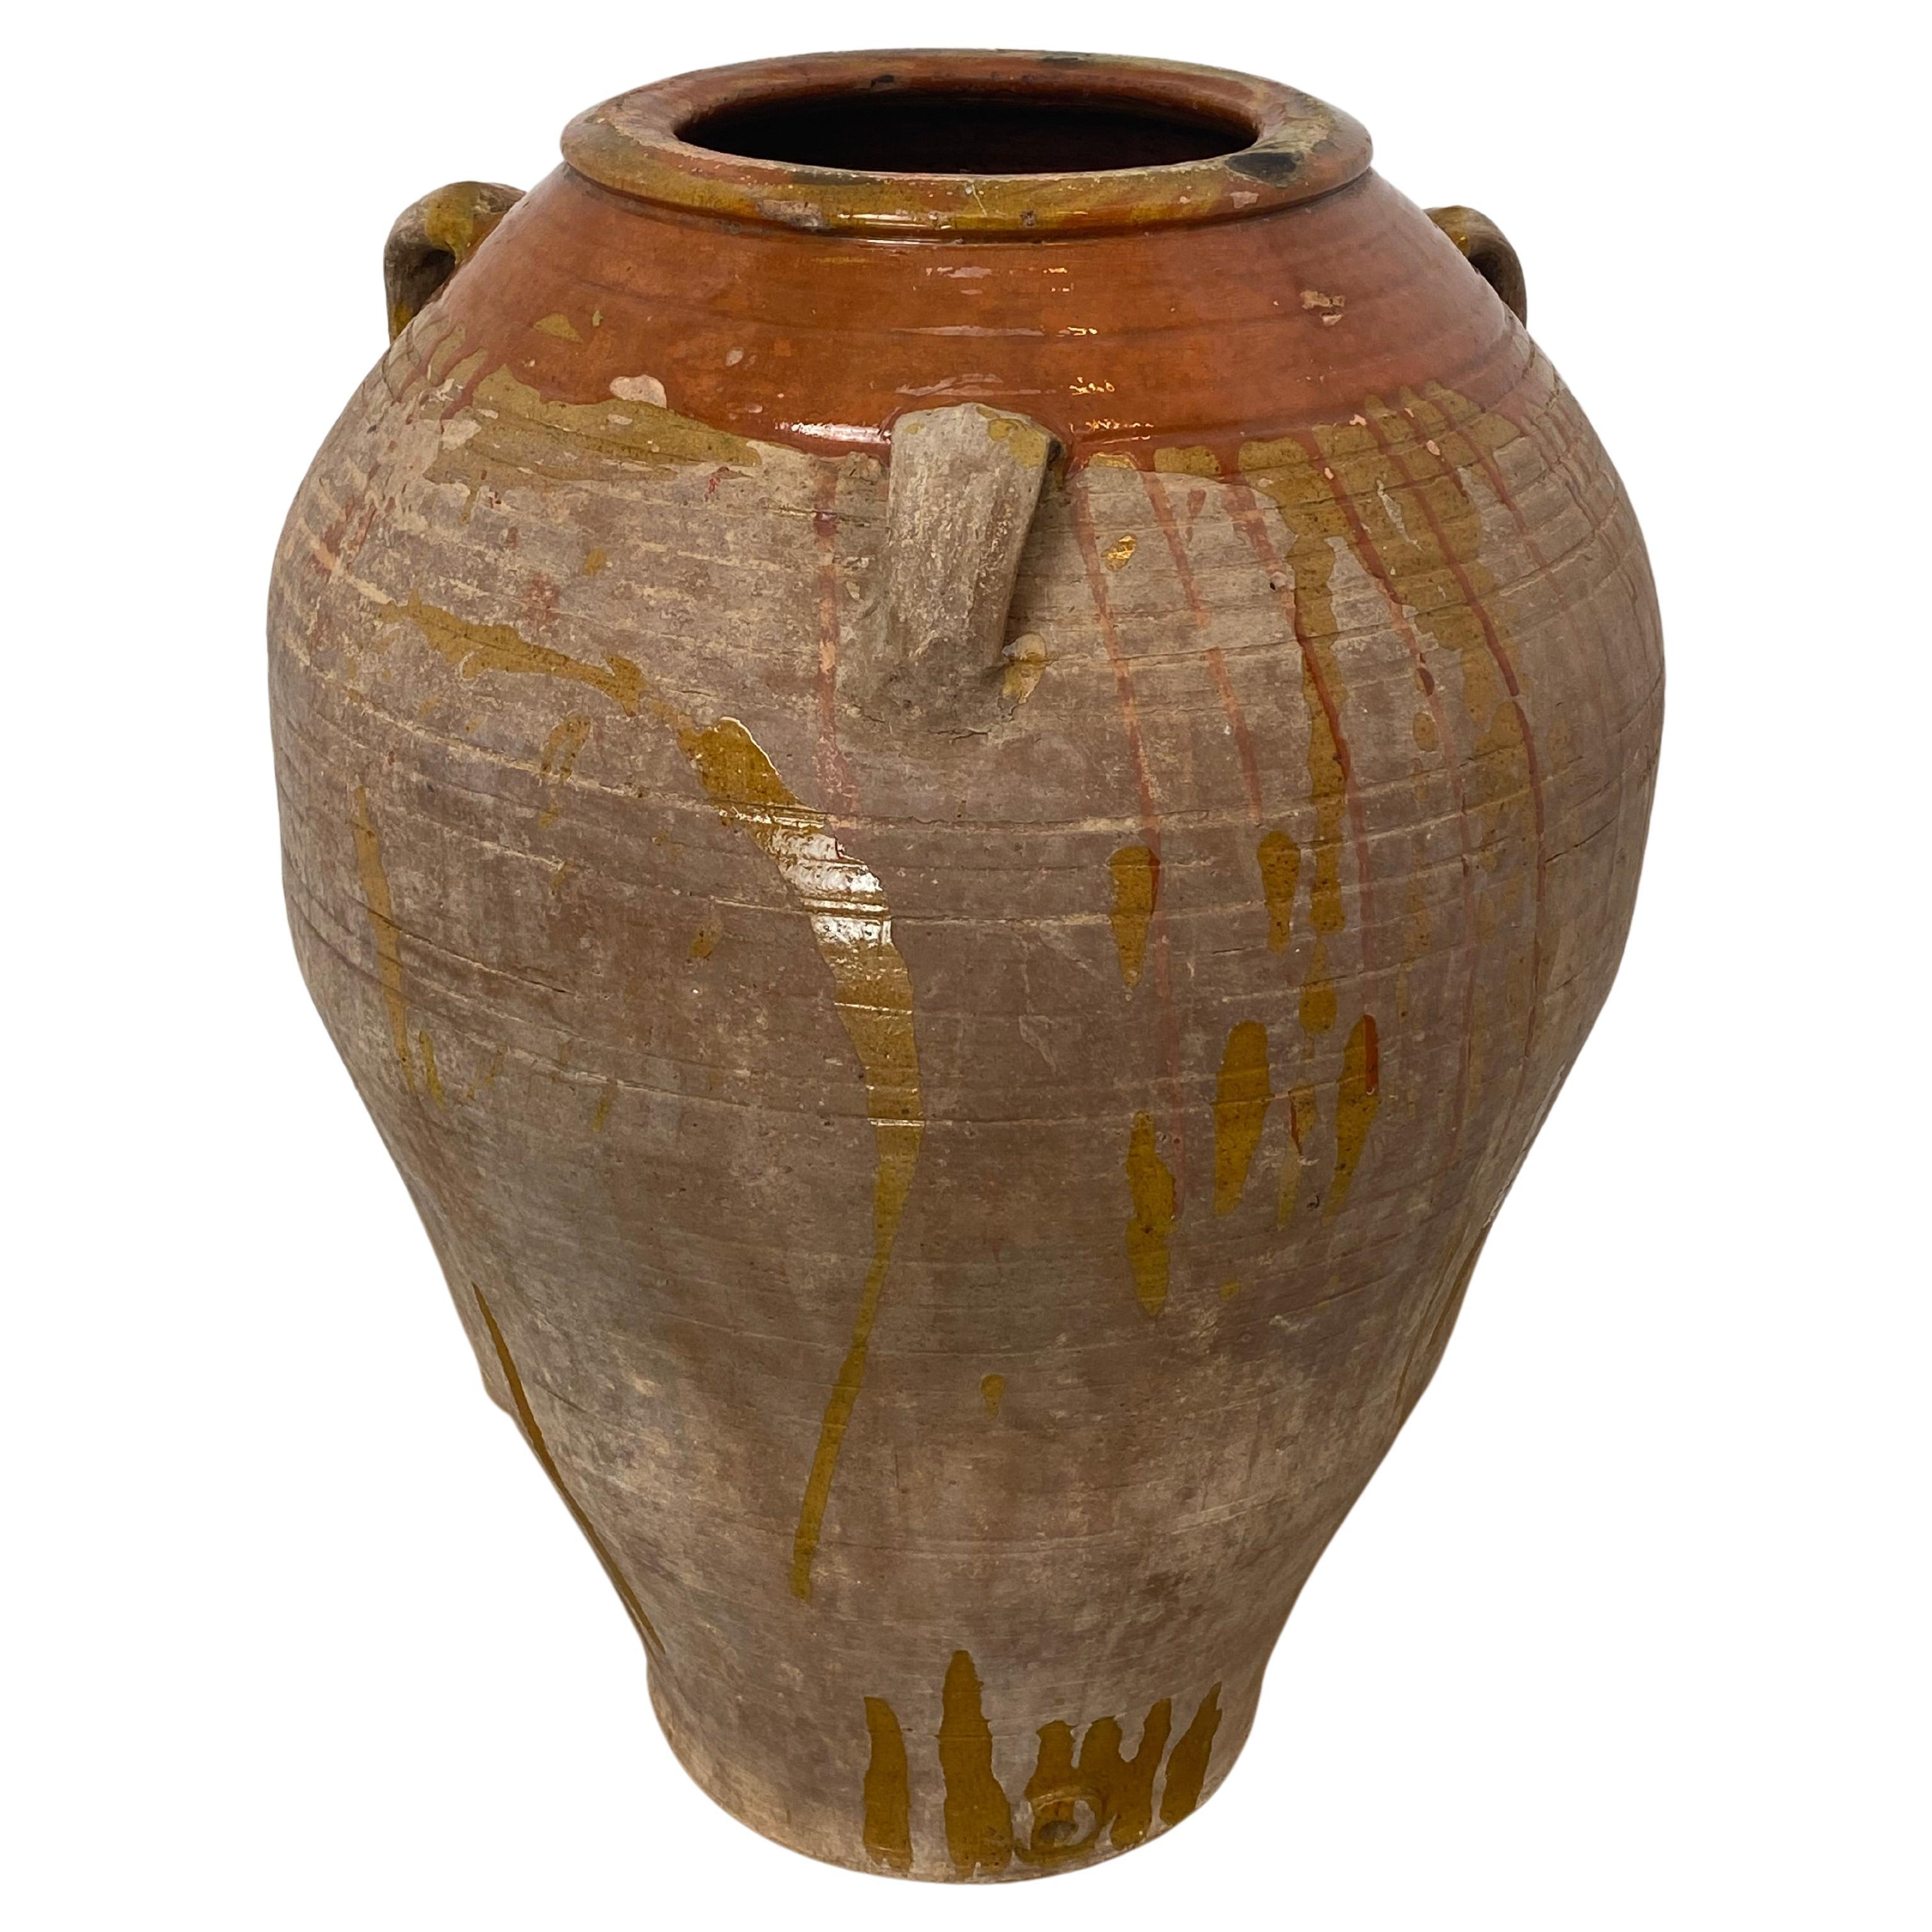 Brutalist, Antique Spanish Pottery Jar